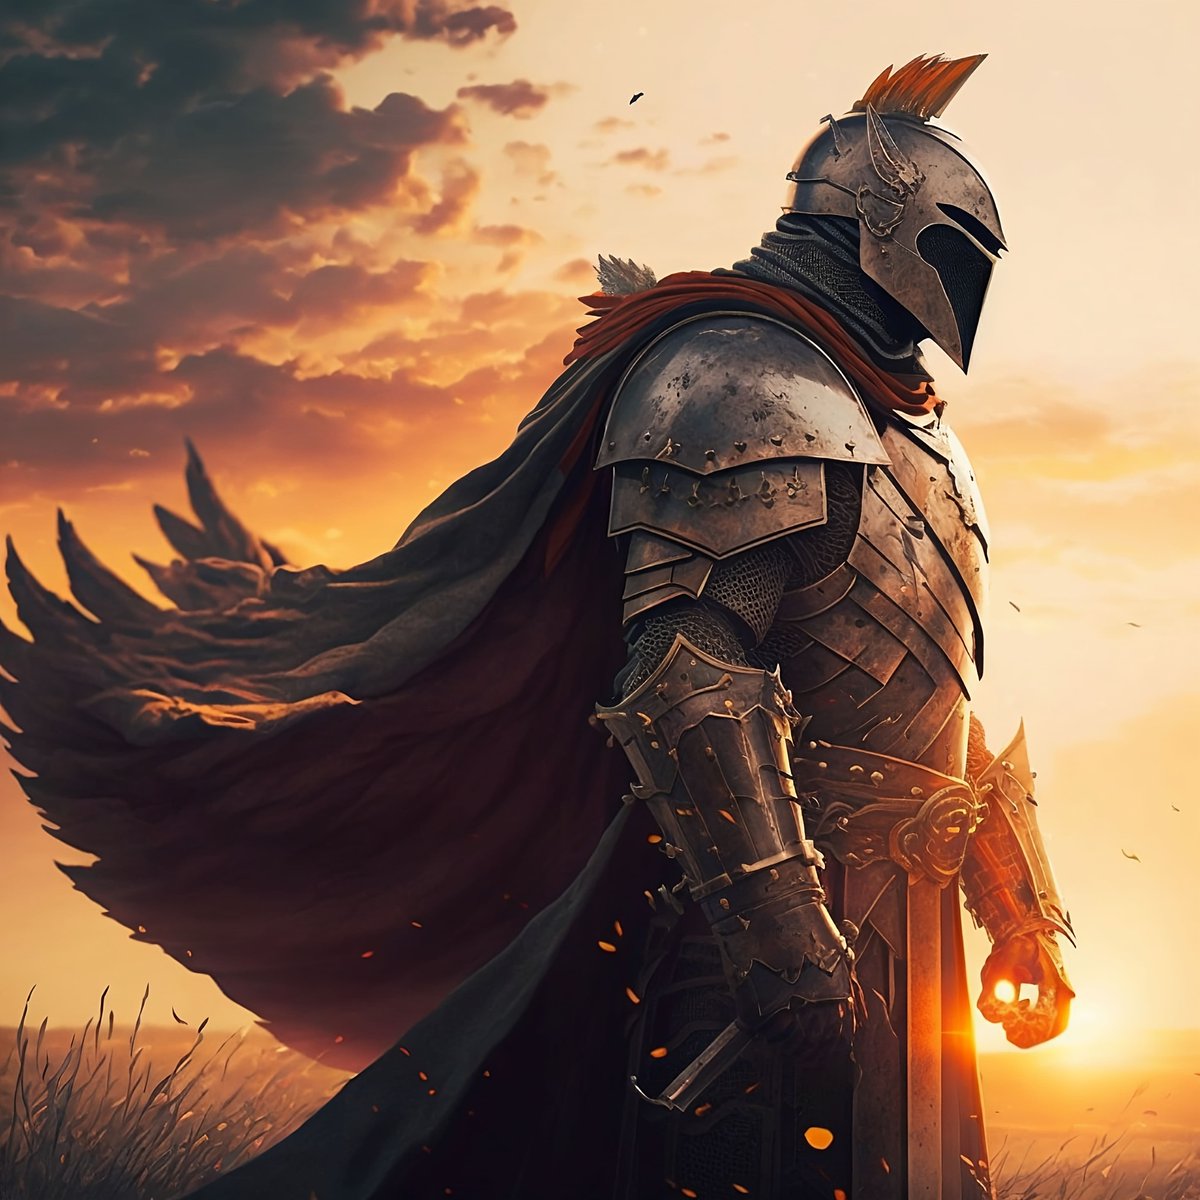 Epic Heroic Knight version 1
#champion #epic #epicfantasy #heroic #knight #knights #medieval #medievalarmor #medievalart #medievalfantasy #sunset #warrior #medievalknight #armorfantasy #knightwarrior #knightarmor #medievalcharacter #armorknight #knightcharacter #midjourney